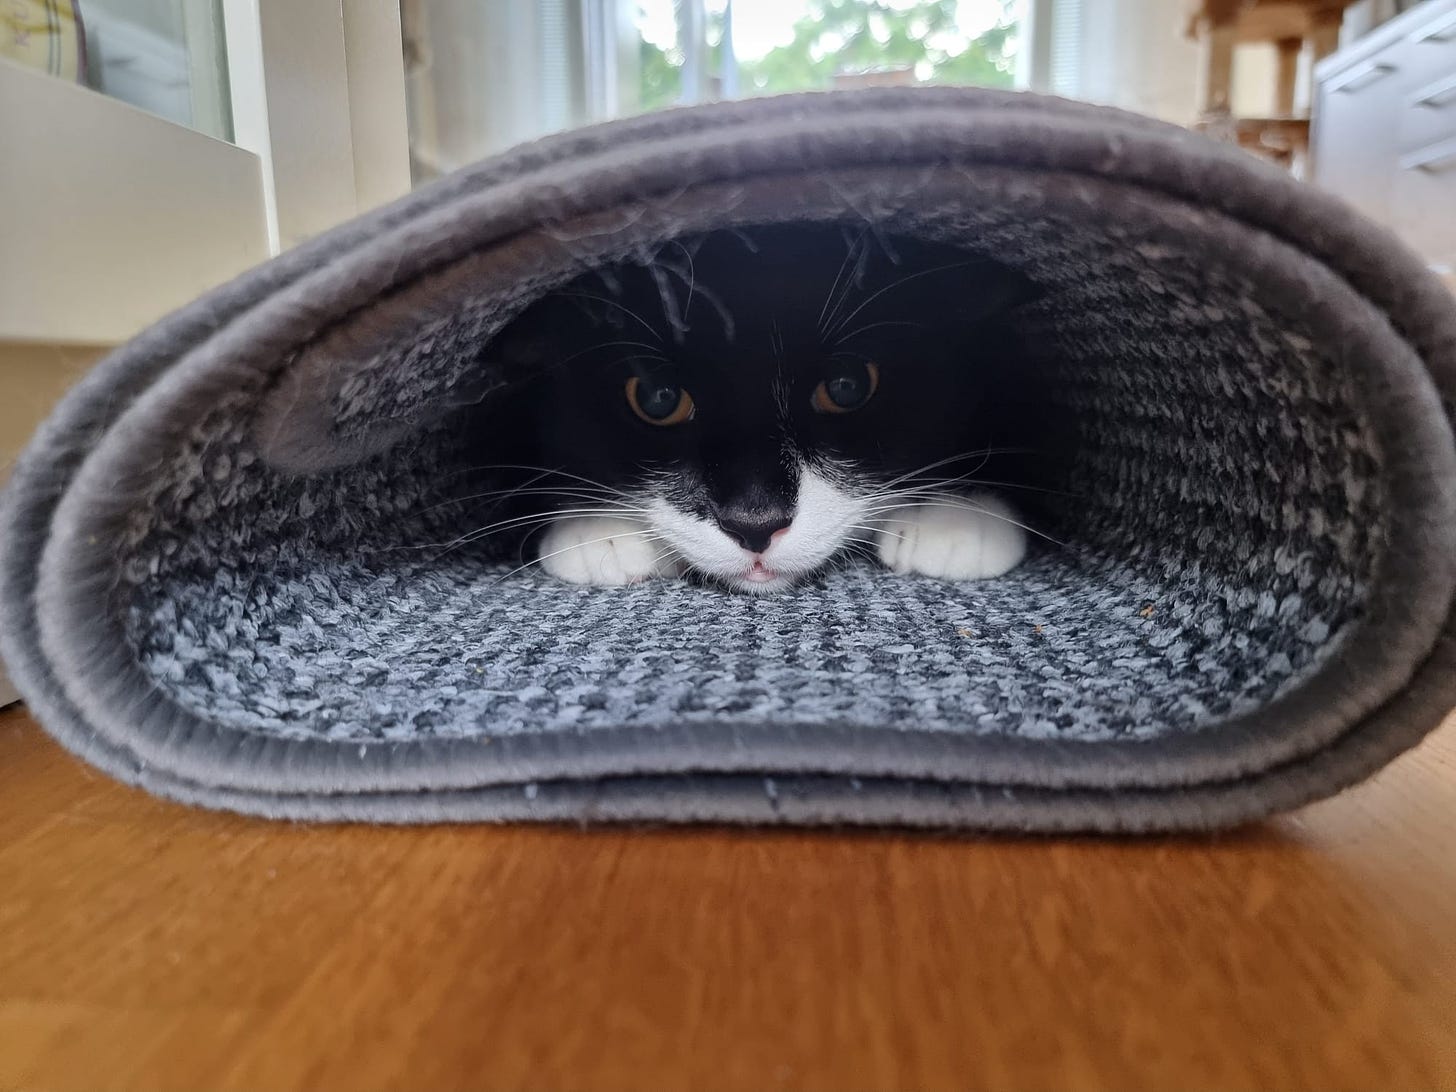 Loki the cat inside a carpet